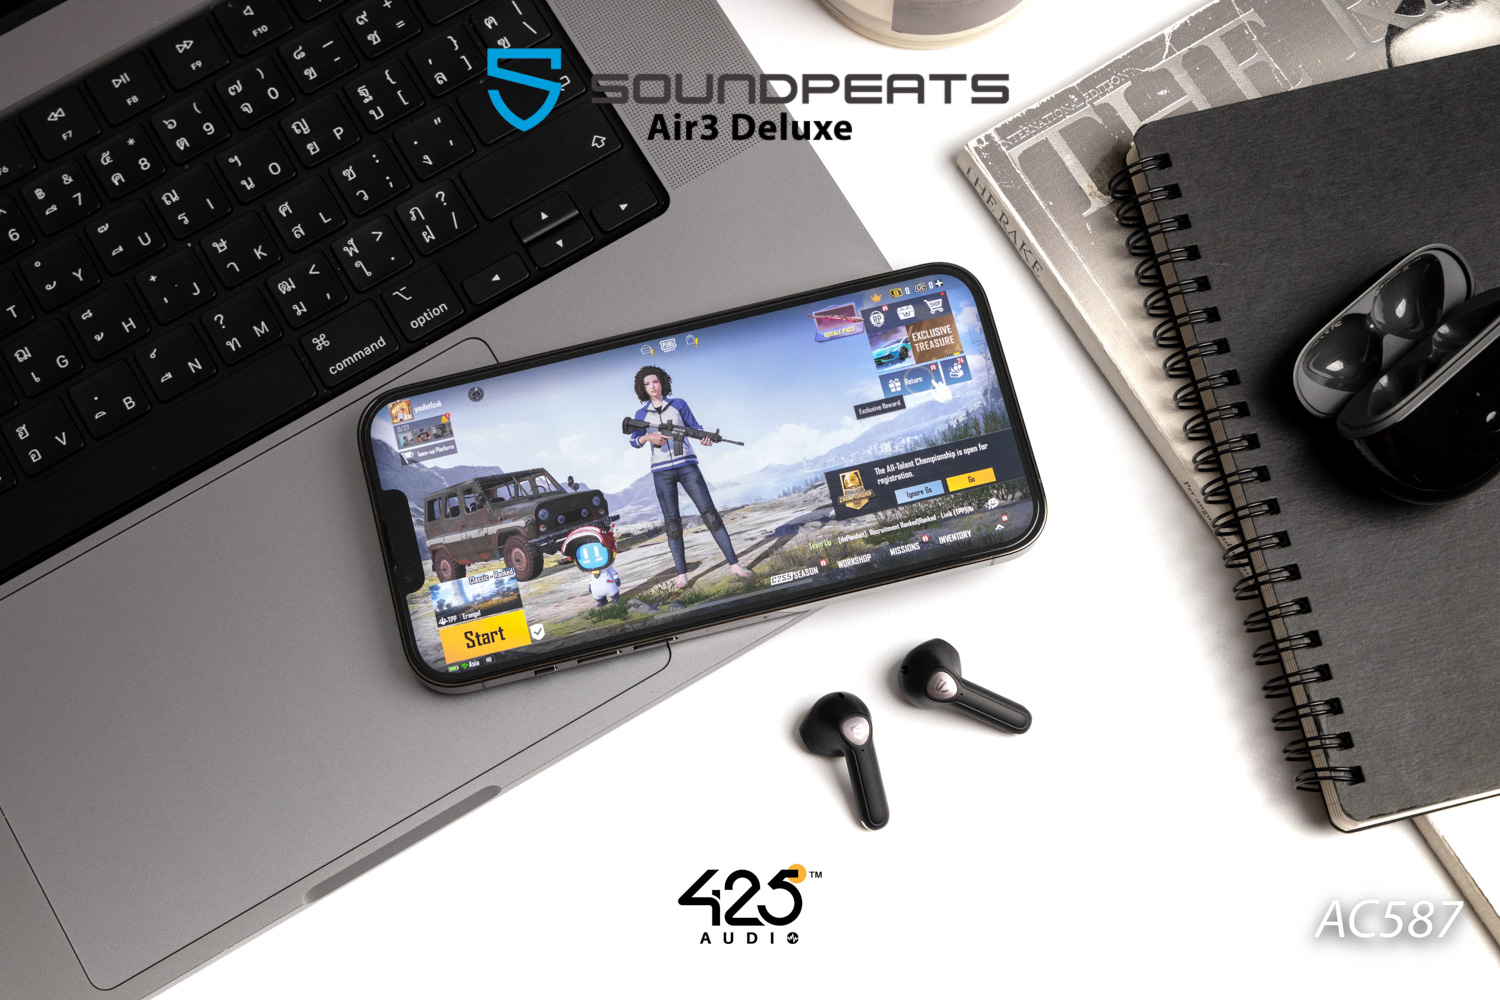 SoundPEATS Air3 Deluxe,true wireless,หูฟังไร้สาย,หูฟังบลูทูธ,earbuds,แบตเตอรี่อึด,ใส่สบาย,ออกกำลังกาย